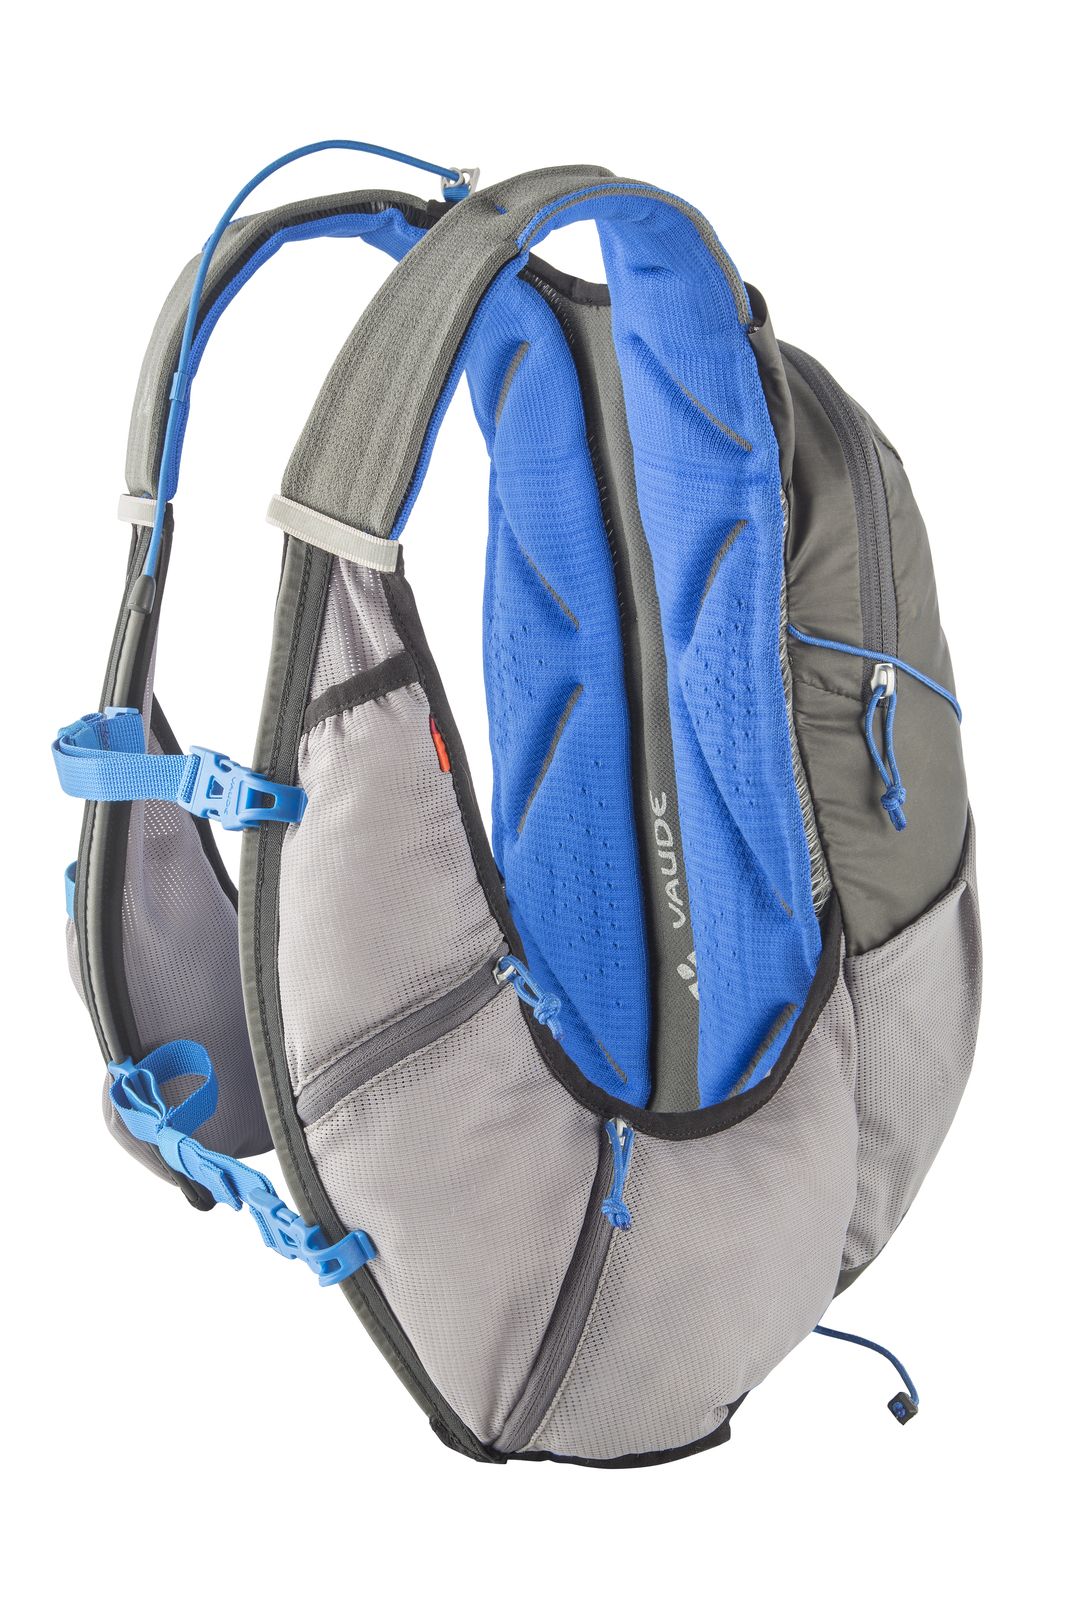 Vaude Trail Spacer 8 L Backpack